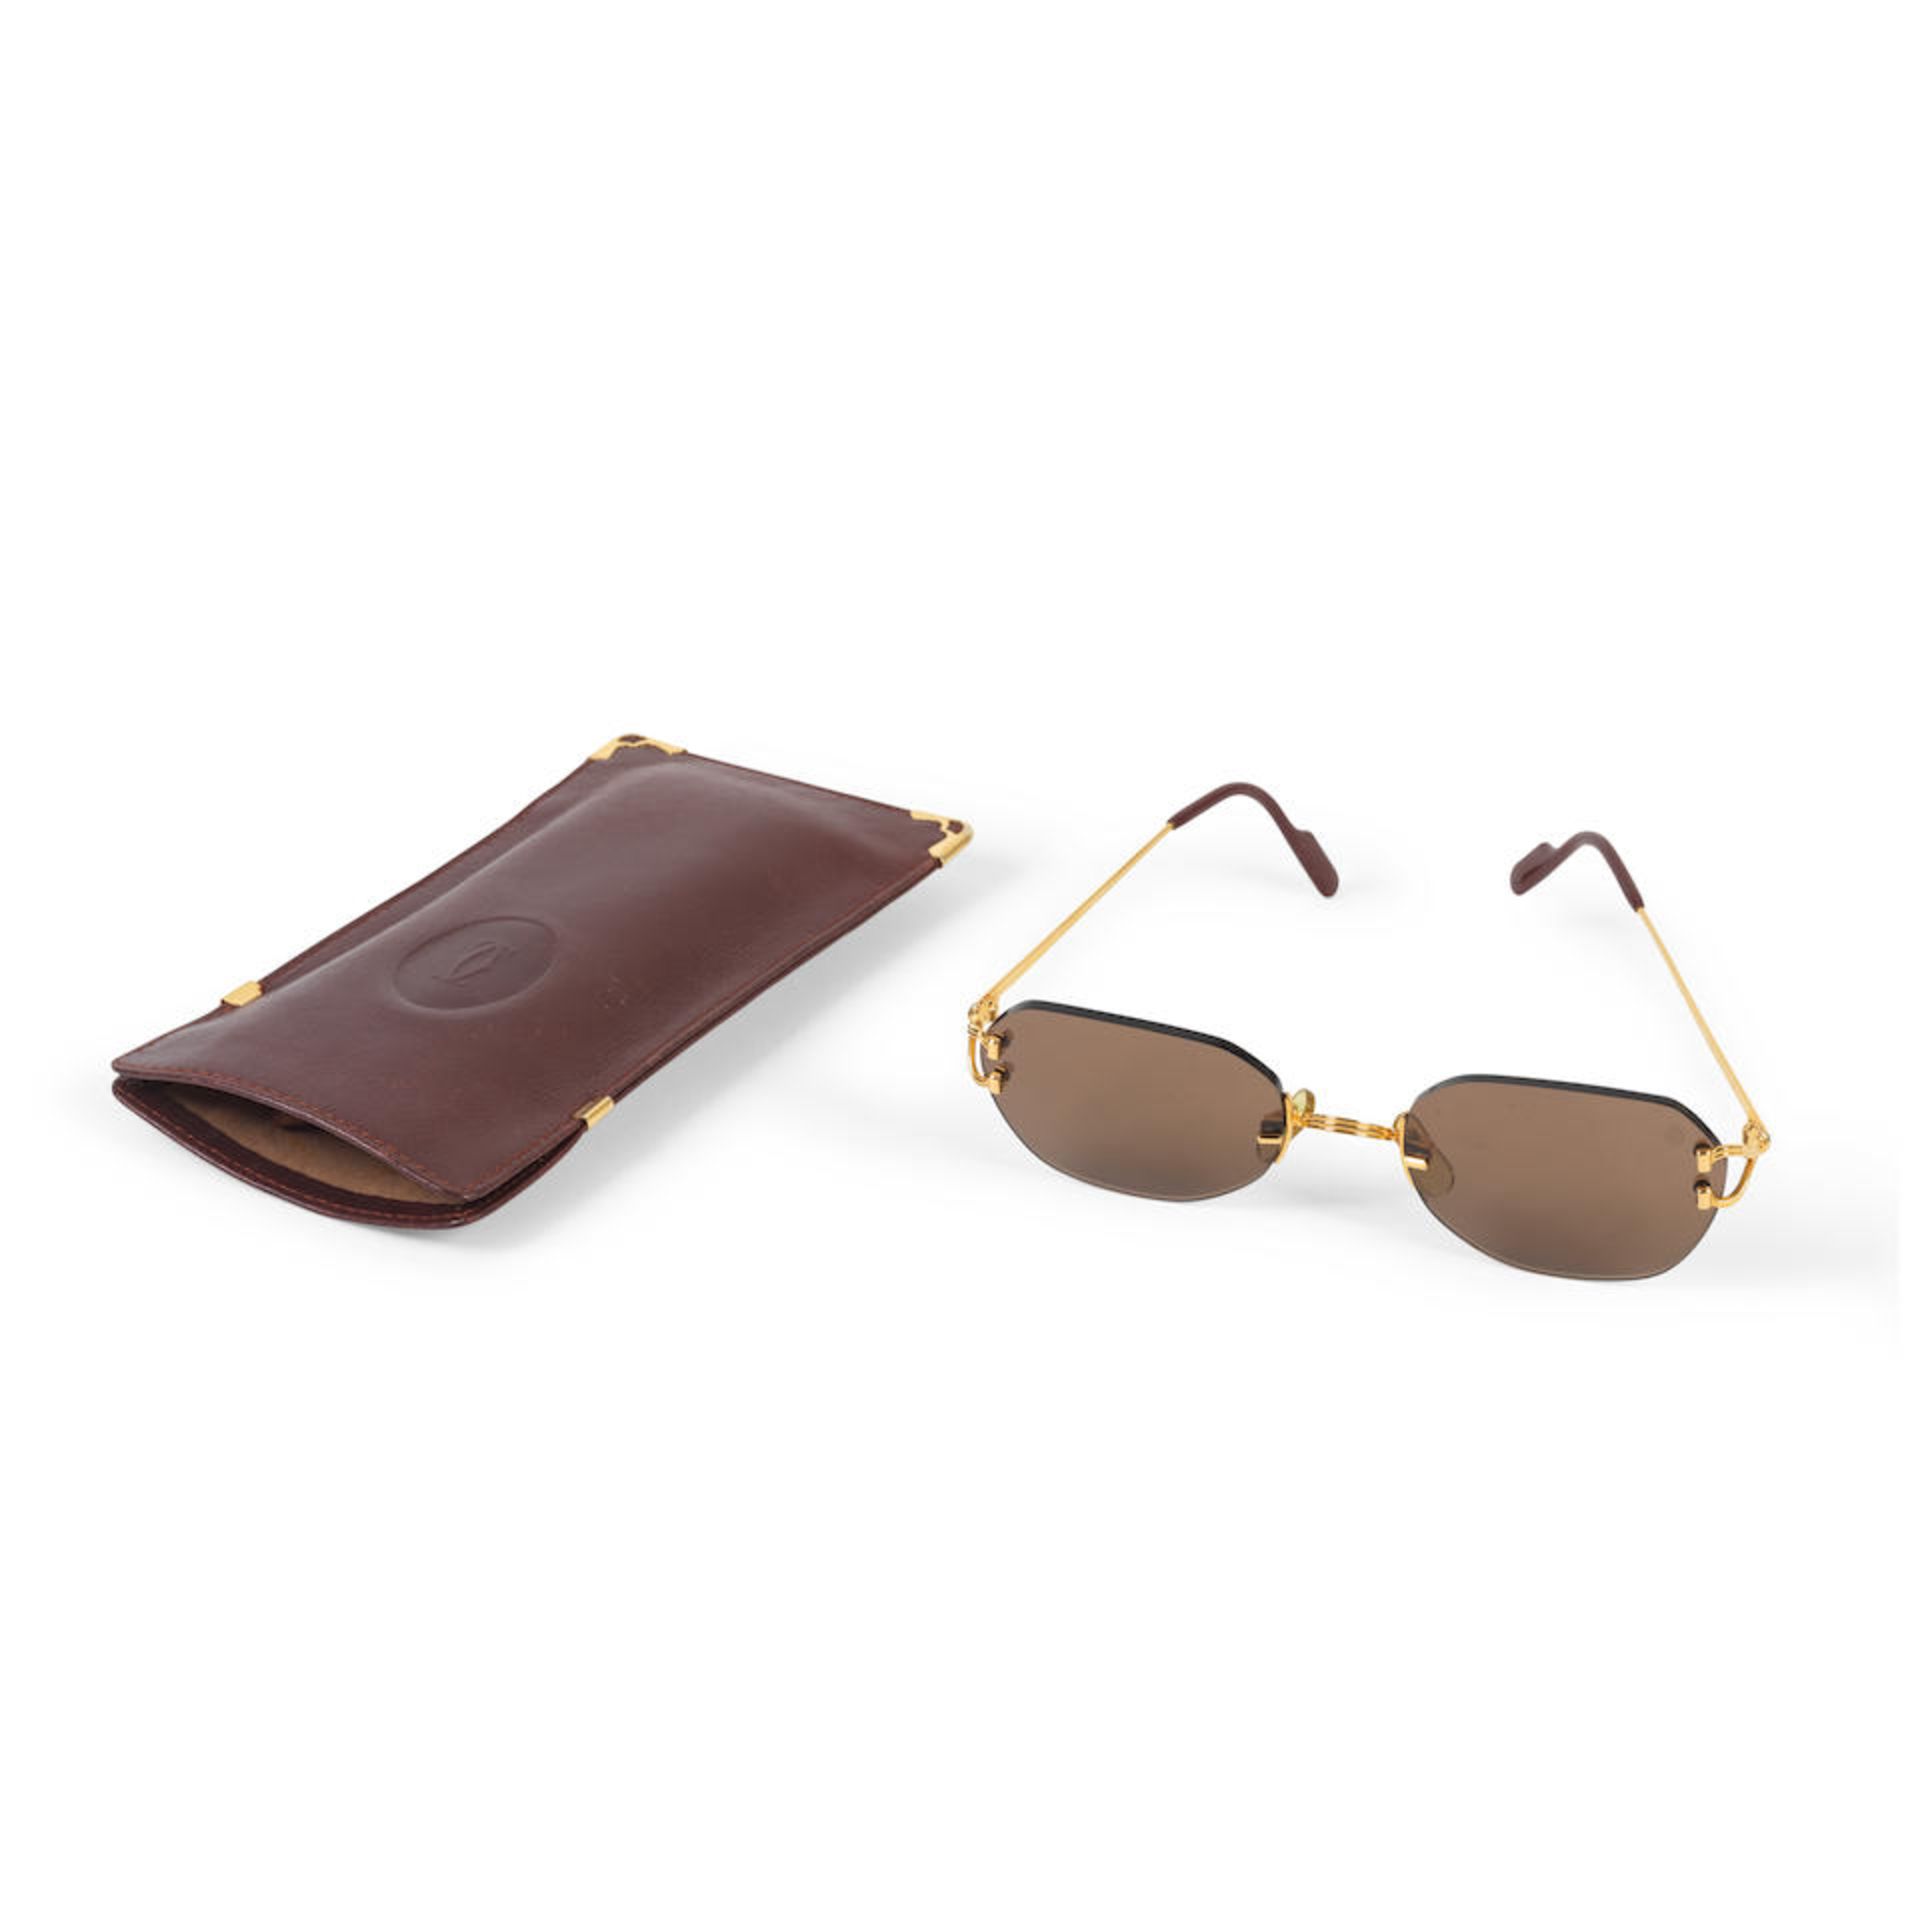 Cartier: a Pair of Rimless C de Cartier Sunglasses (Includes pouch)